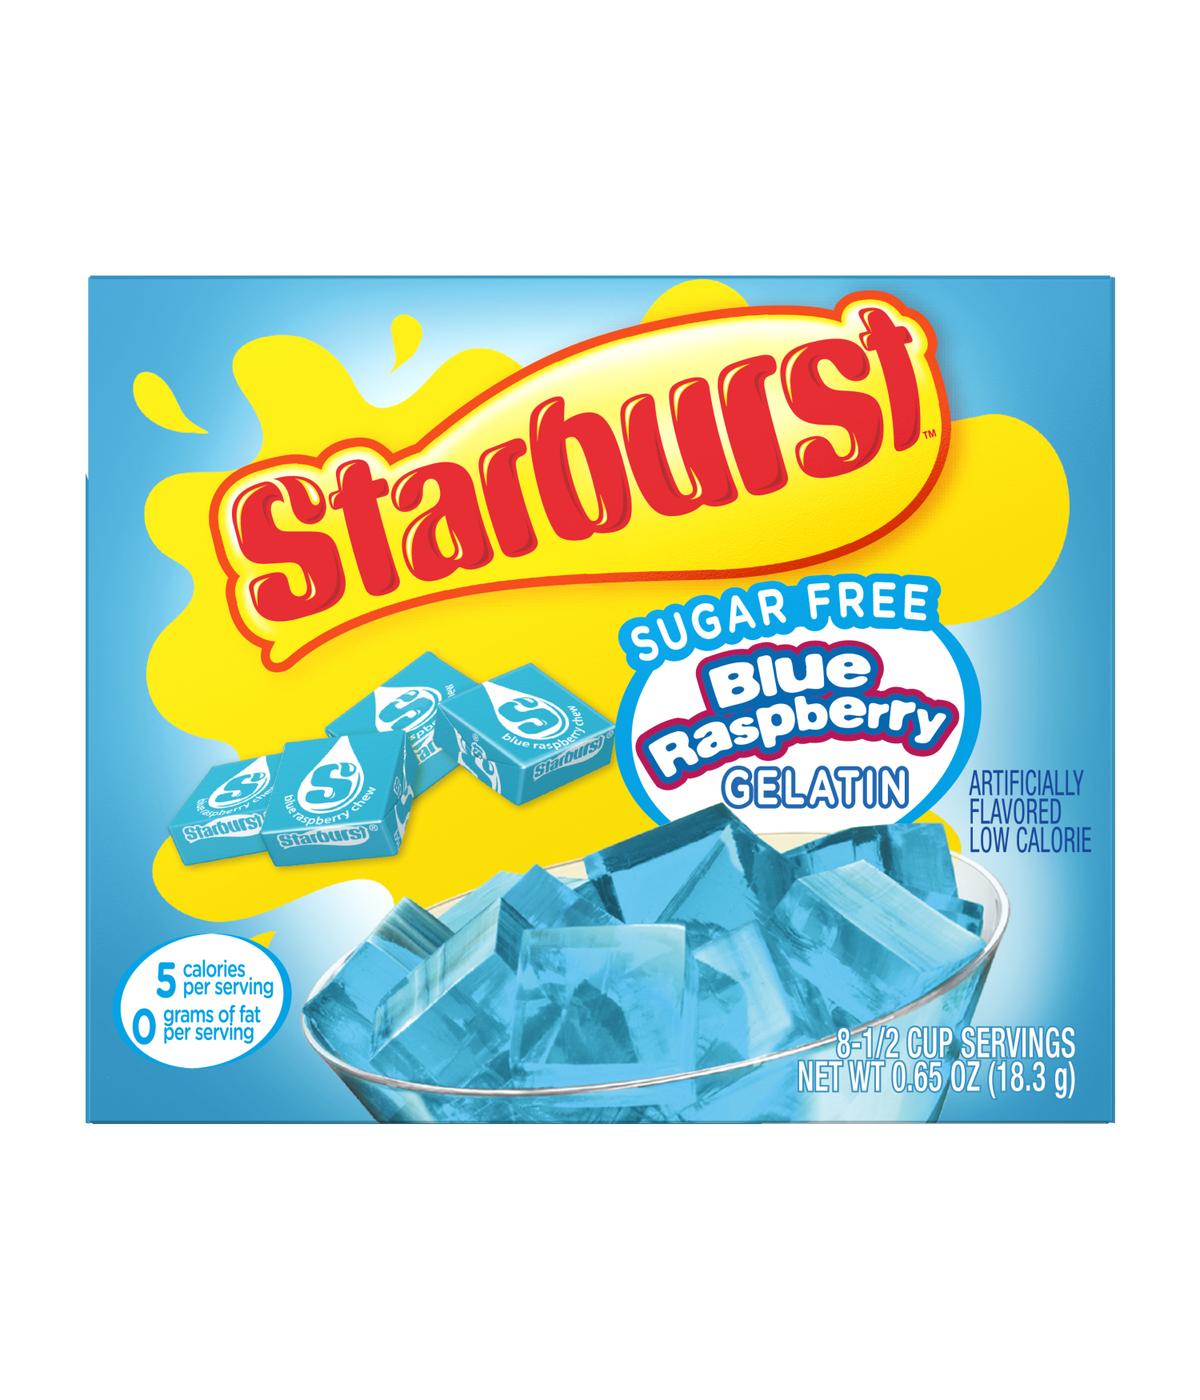 Starburst Gelatin - Sugar Free Blue Raspberry; image 1 of 4